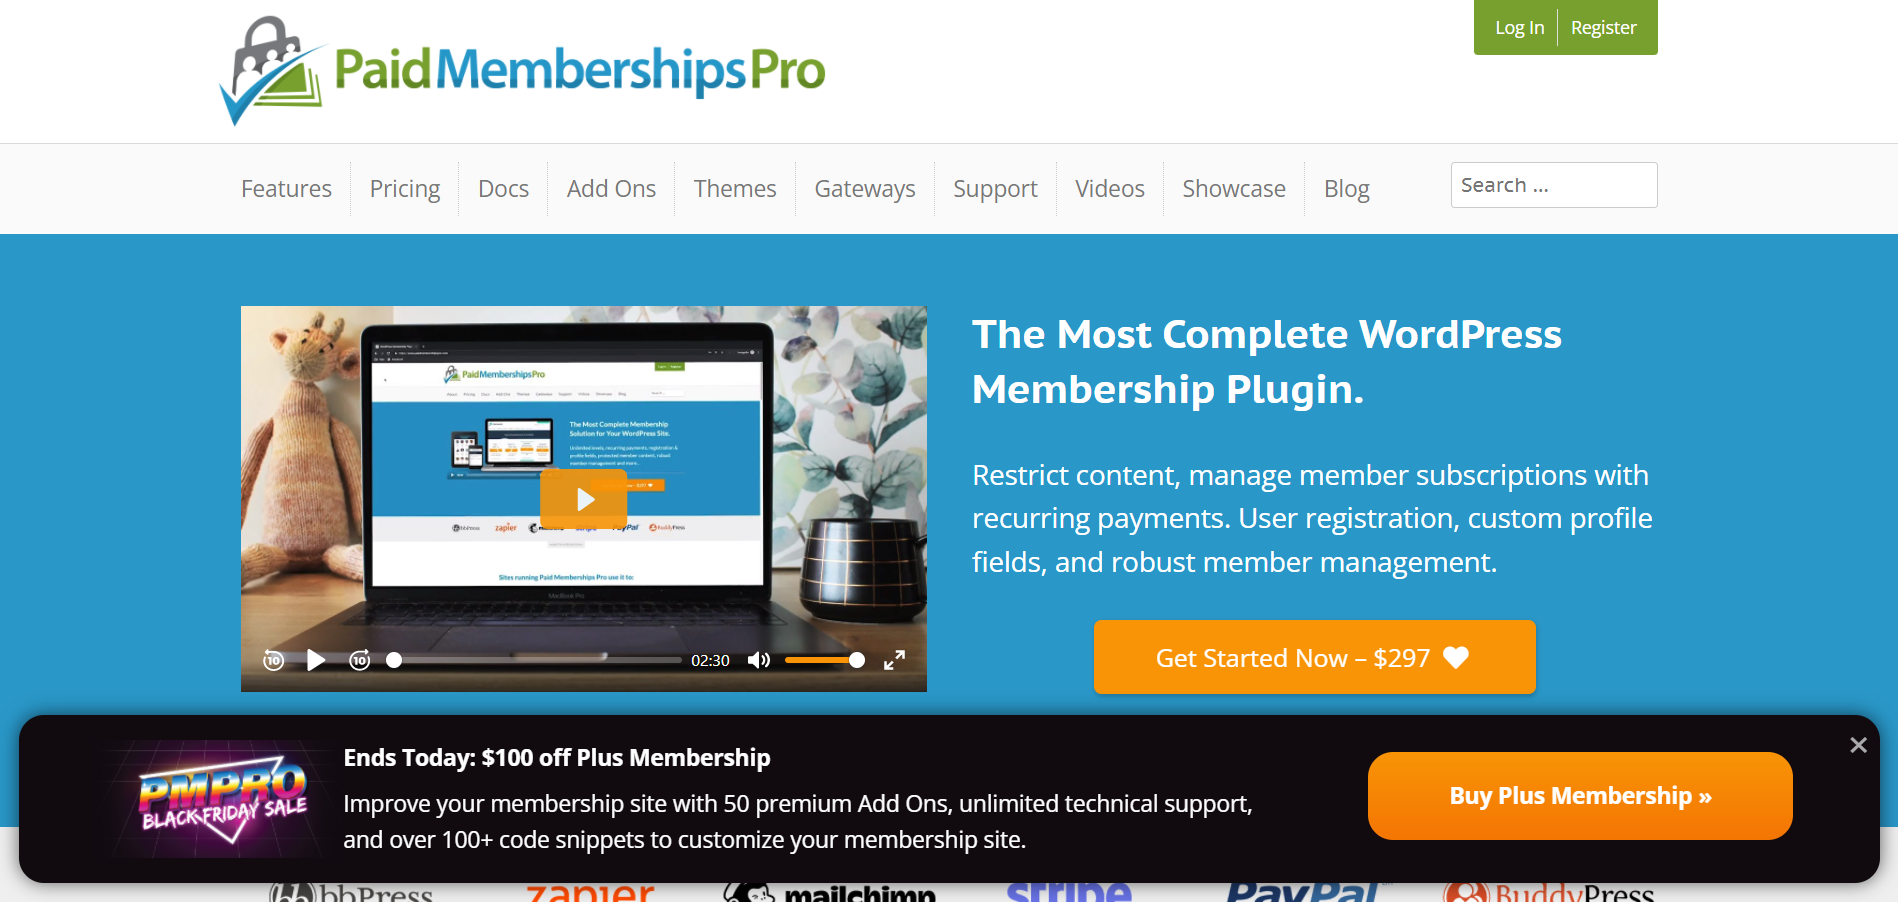 paidmembershipspro- best memberhsip plugins for wordpress